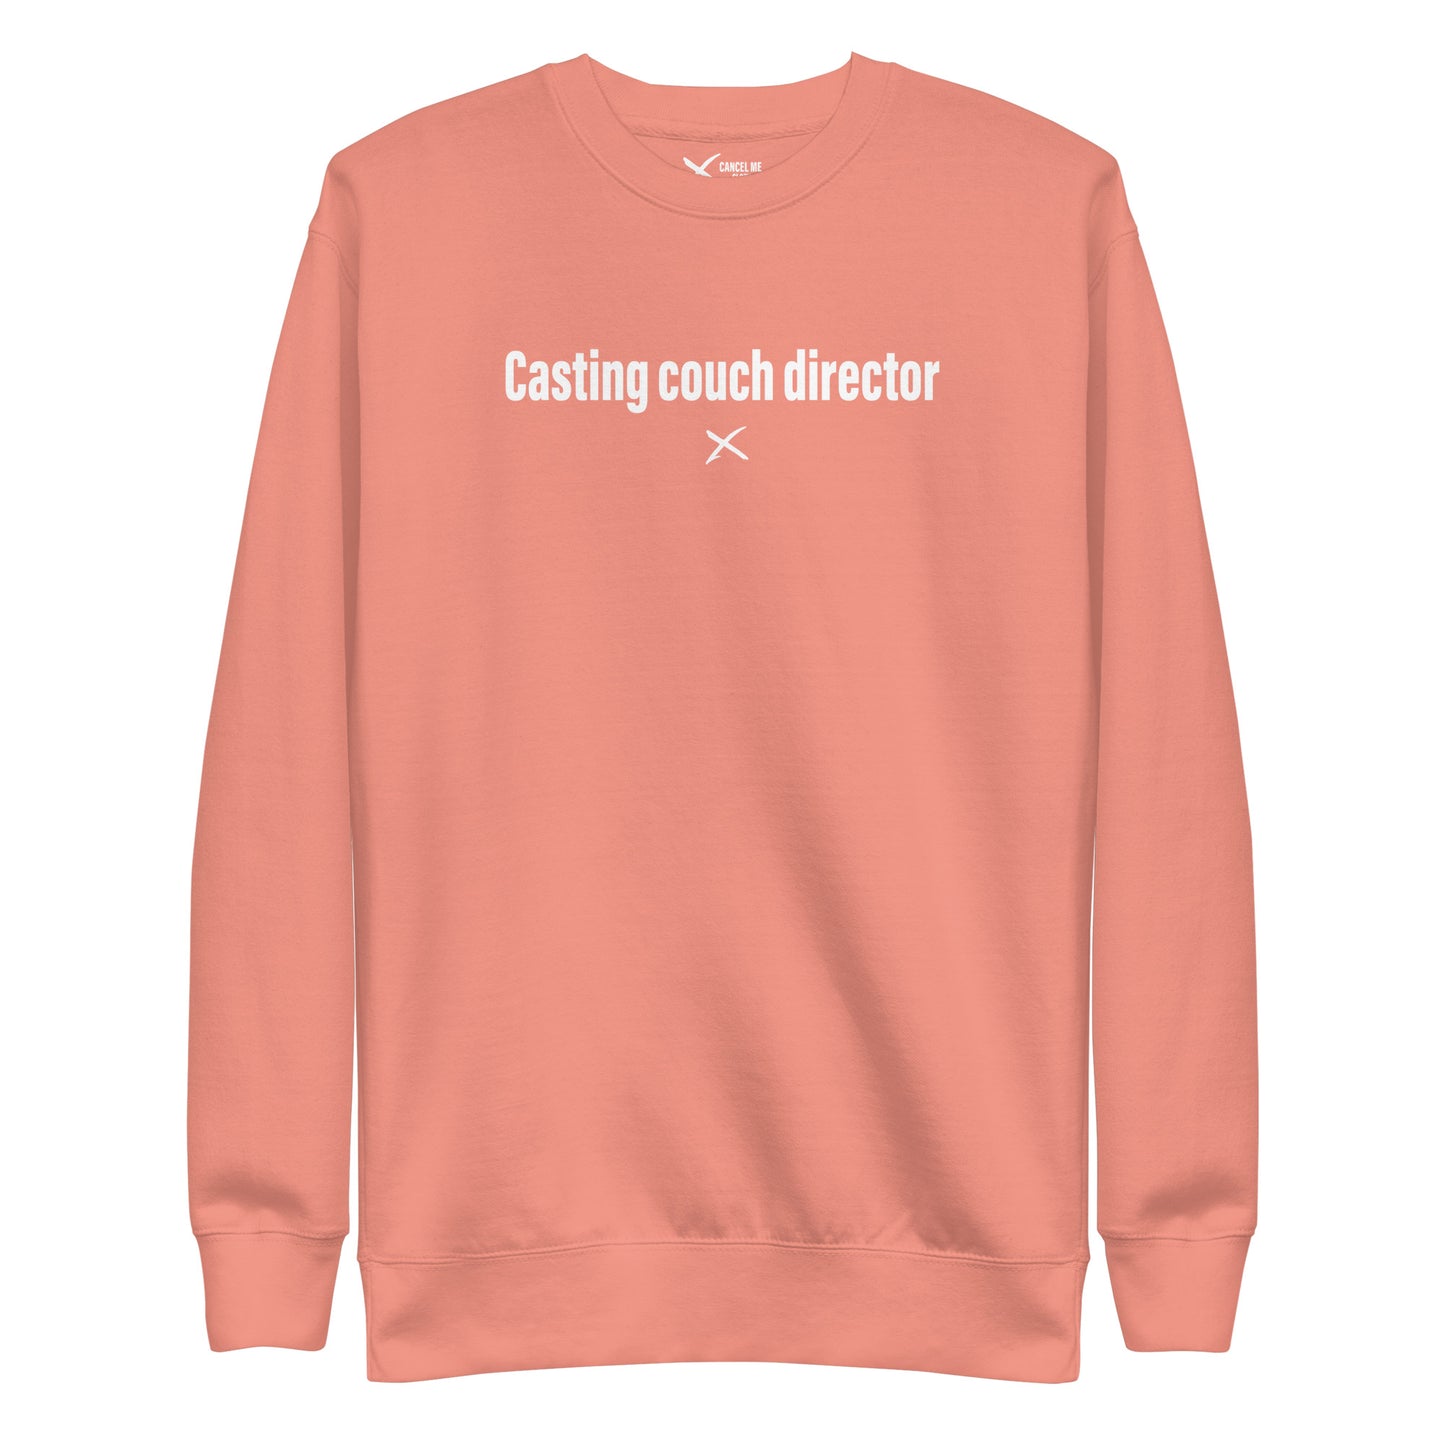 Casting couch director - Sweatshirt